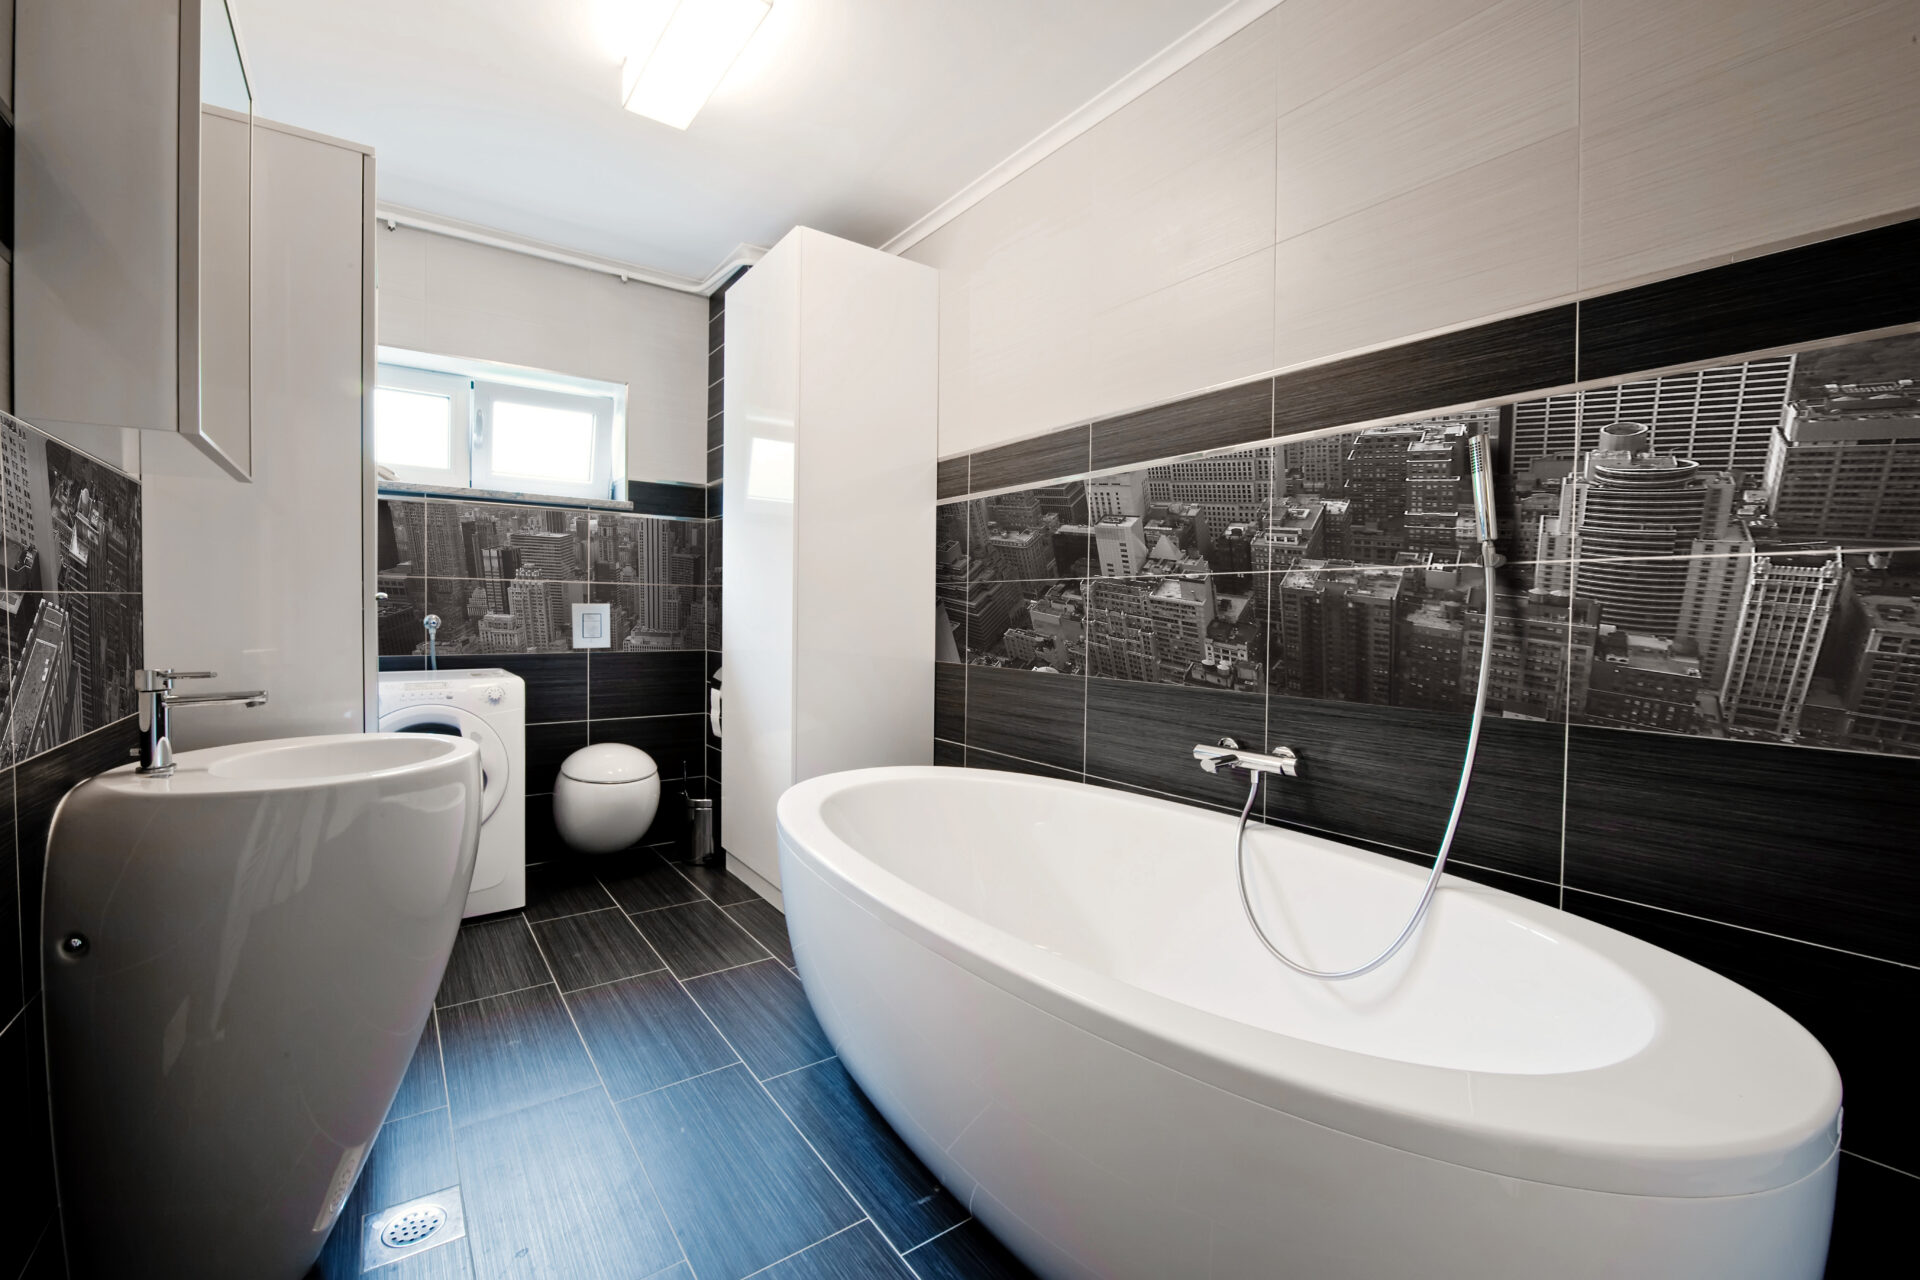 New York Hotel Bathroom Customized With Tiles